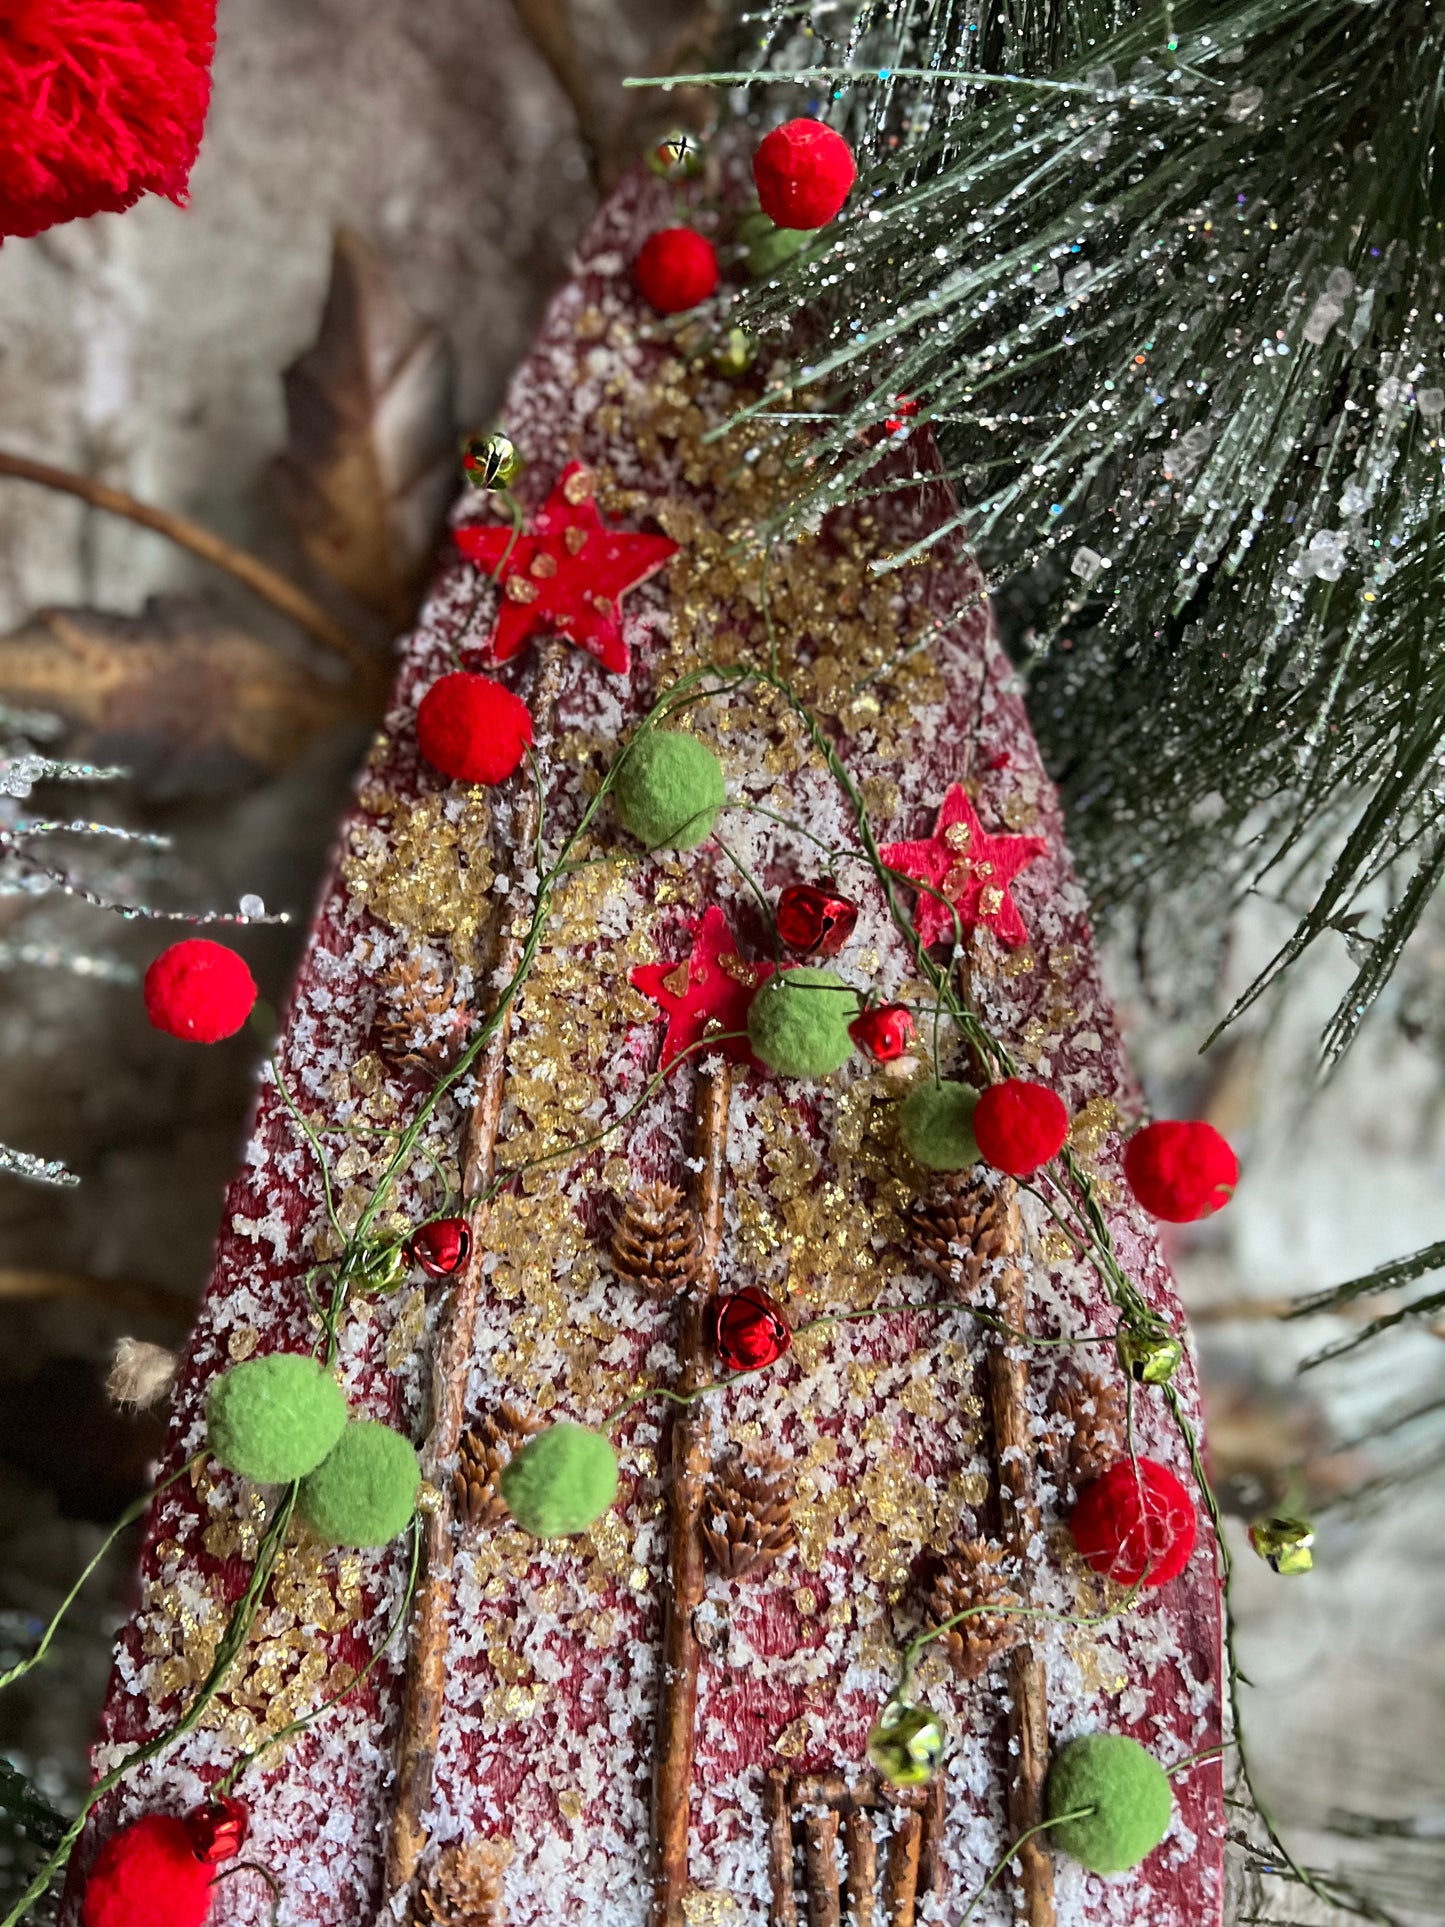 'Merry & Bright' Holiday Decorative Cabin Wonderland Wall Hanger